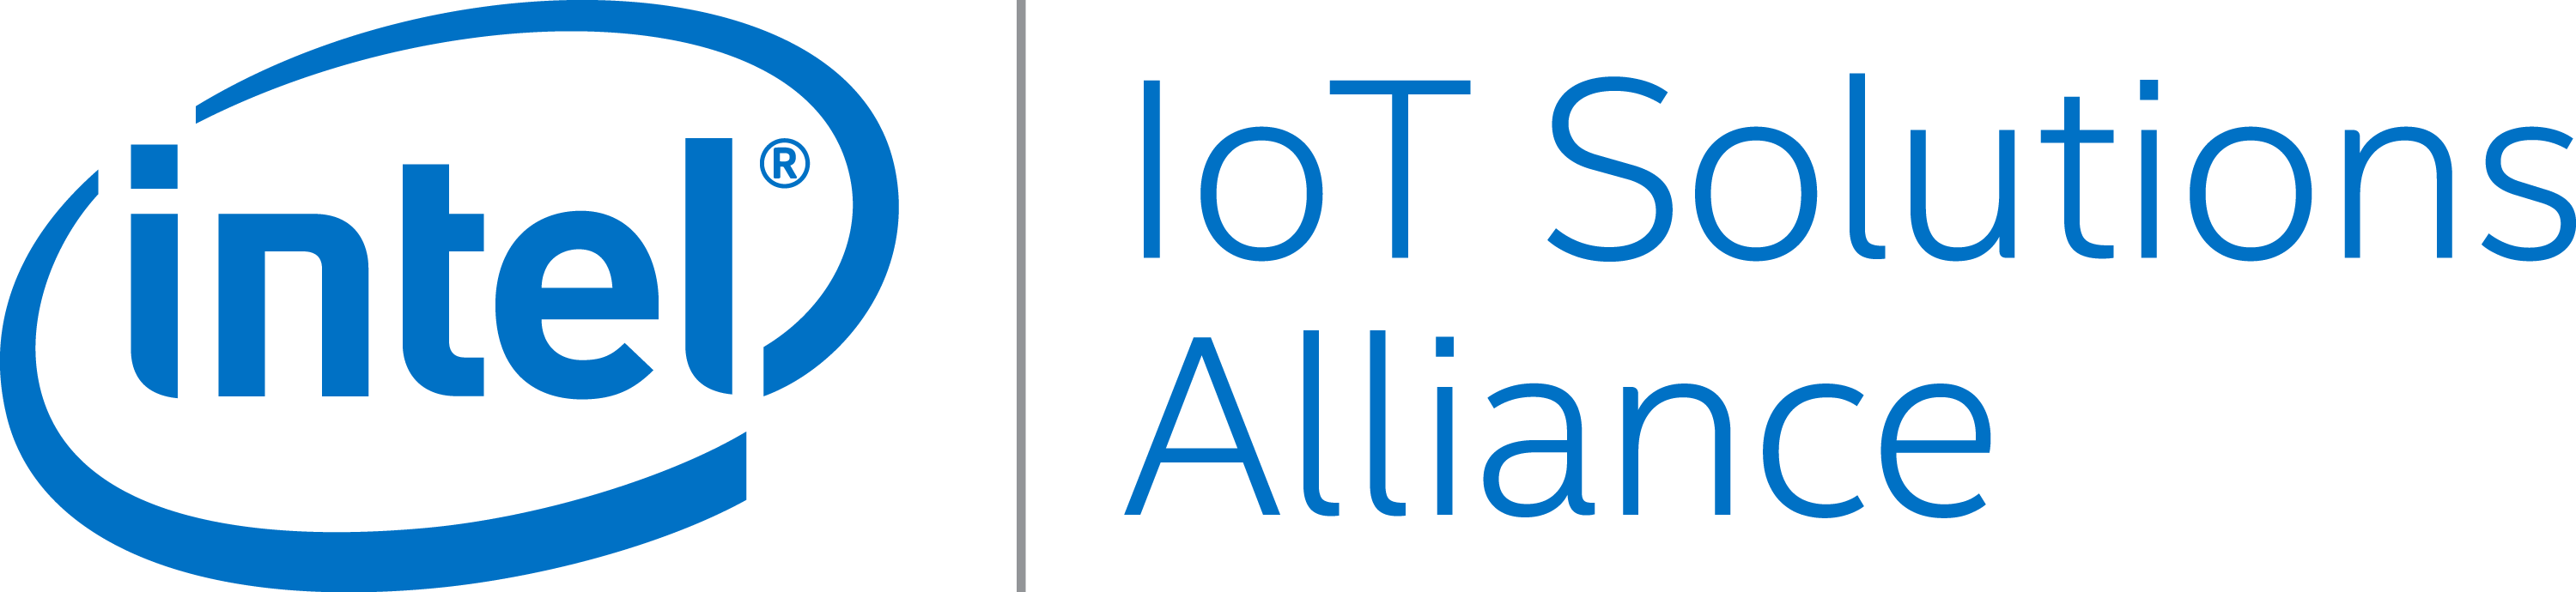 Intel IOT Solutions Alliance